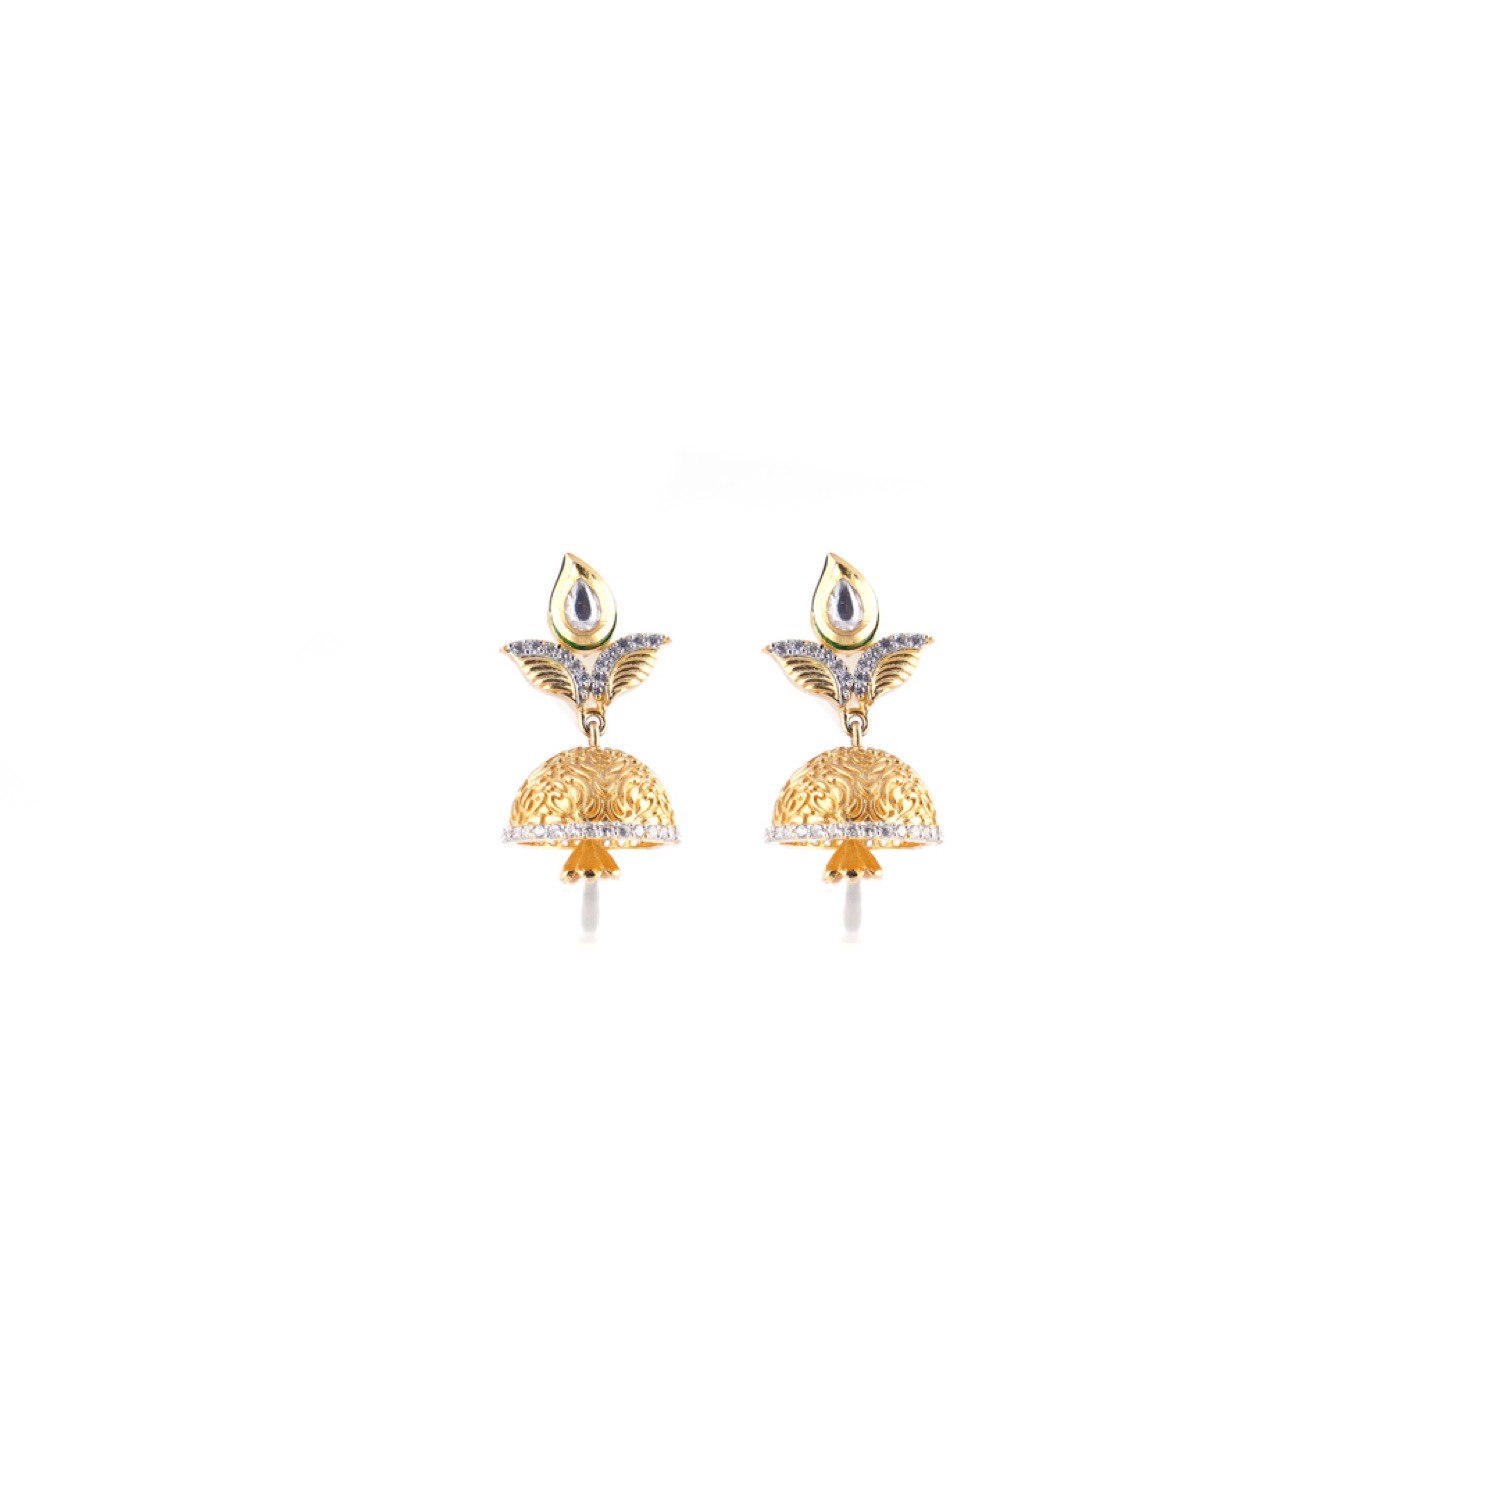 varam_earrings_102022_eagle_design_gold_coated_jumkha_with_pearl_droping_silver_earrings-1